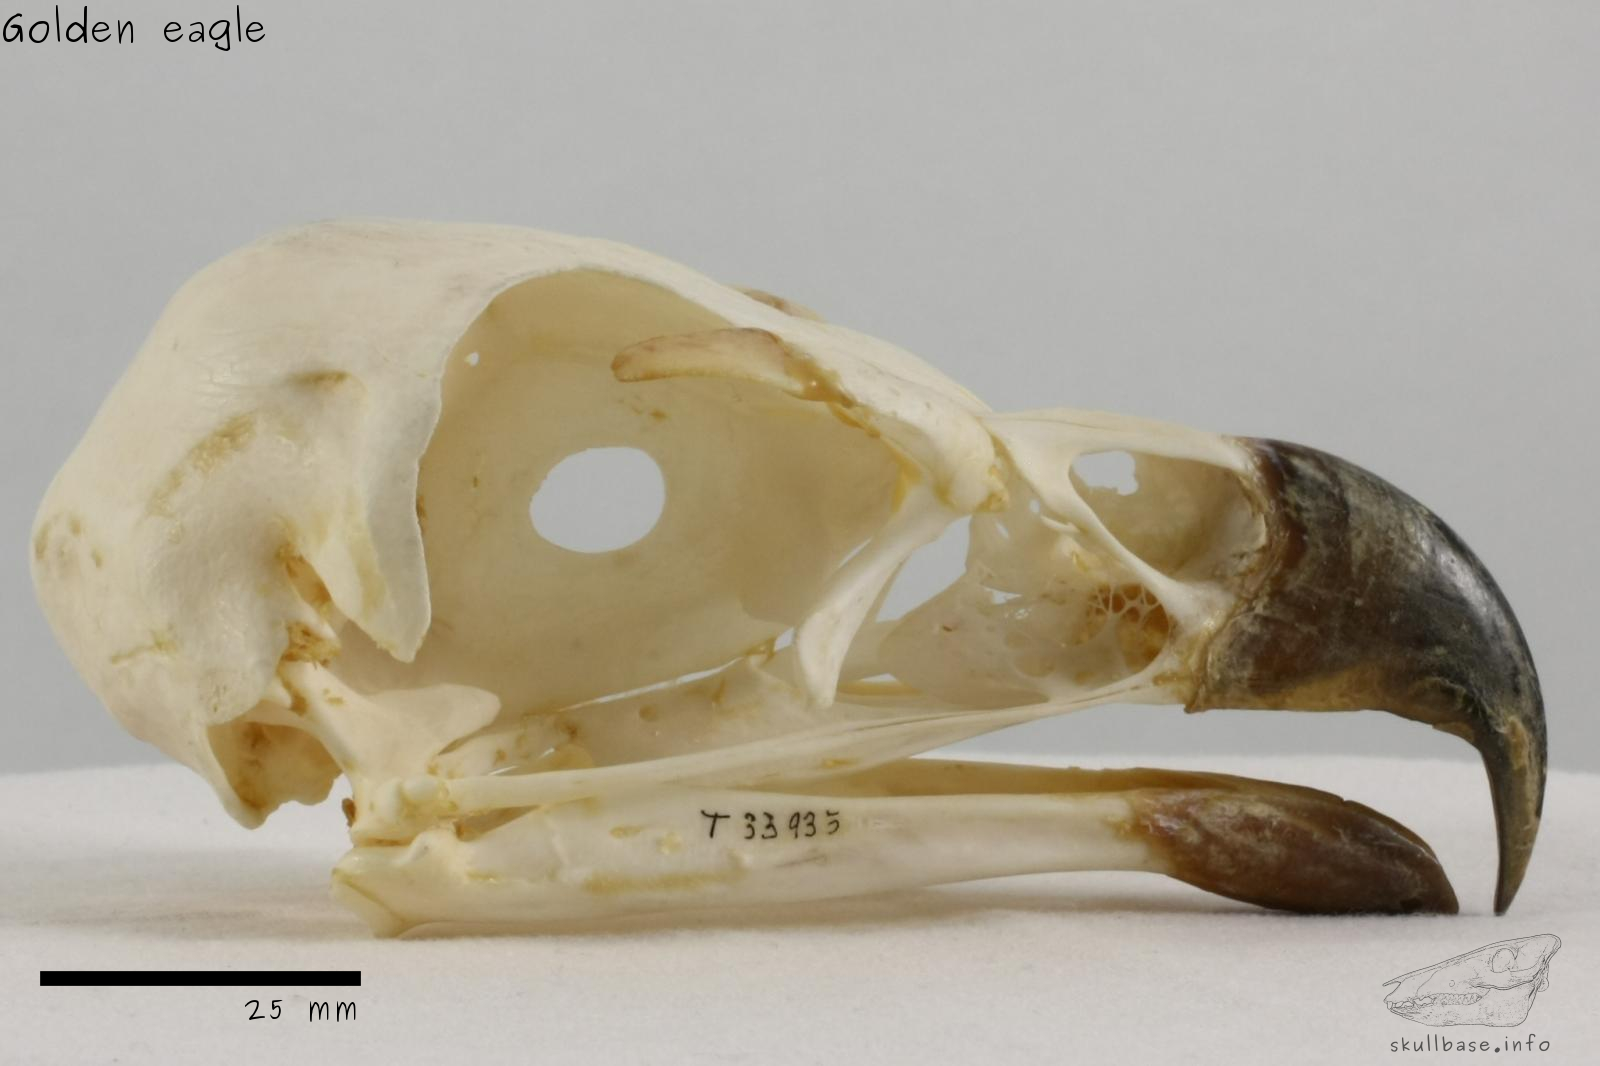 Golden eagle (Aquila chrysaetos) skull lateral view